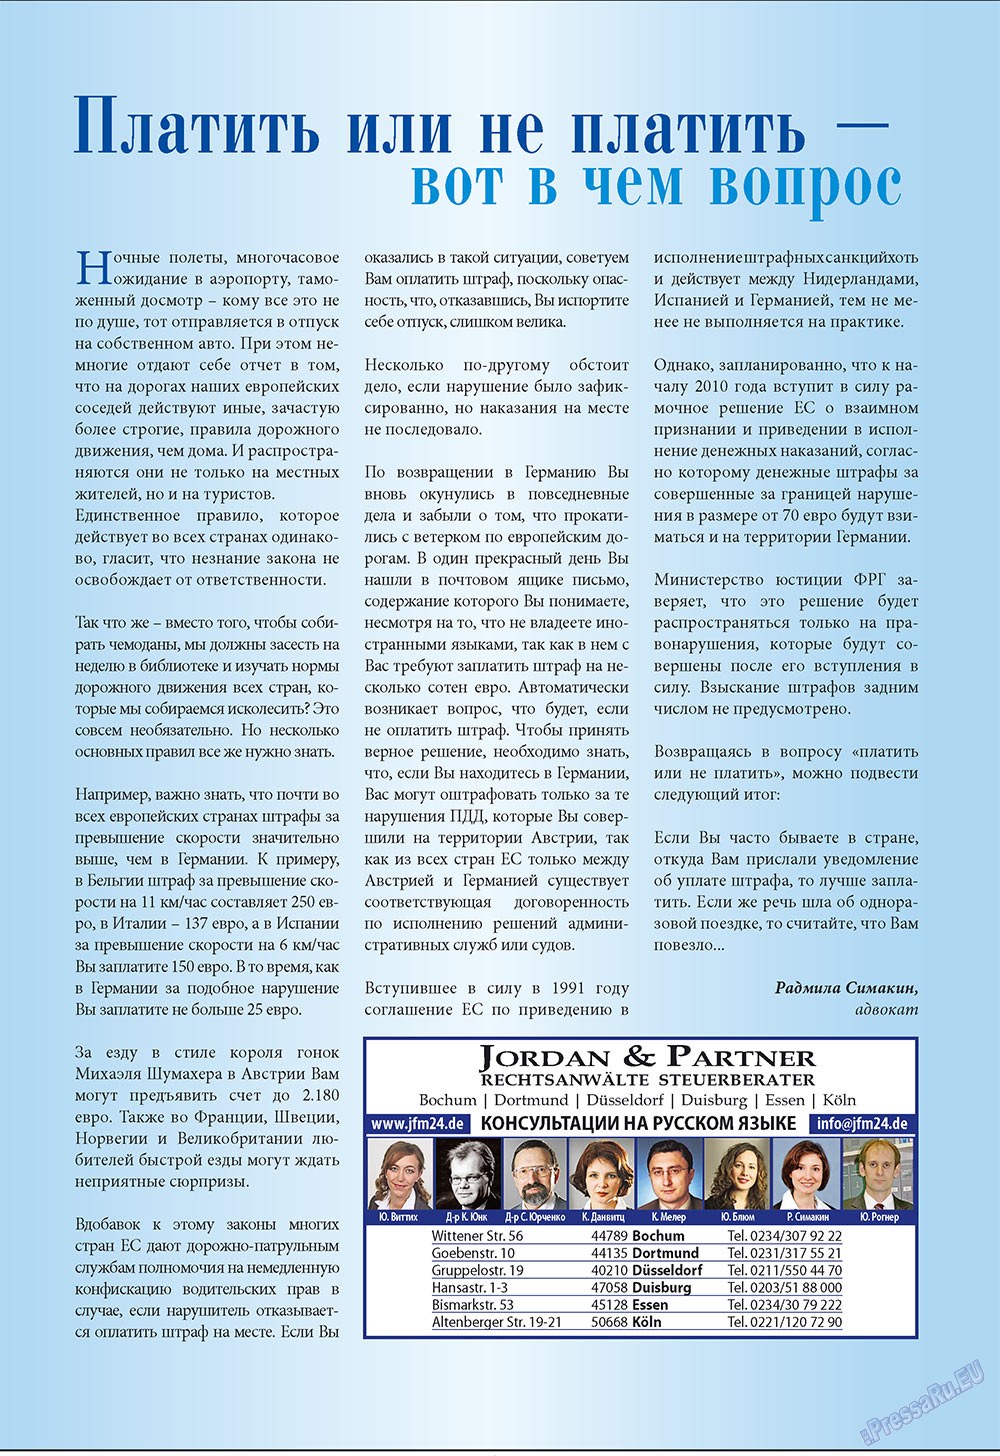 Наше Турбюро (журнал). 2009 год, номер 5, стр. 46